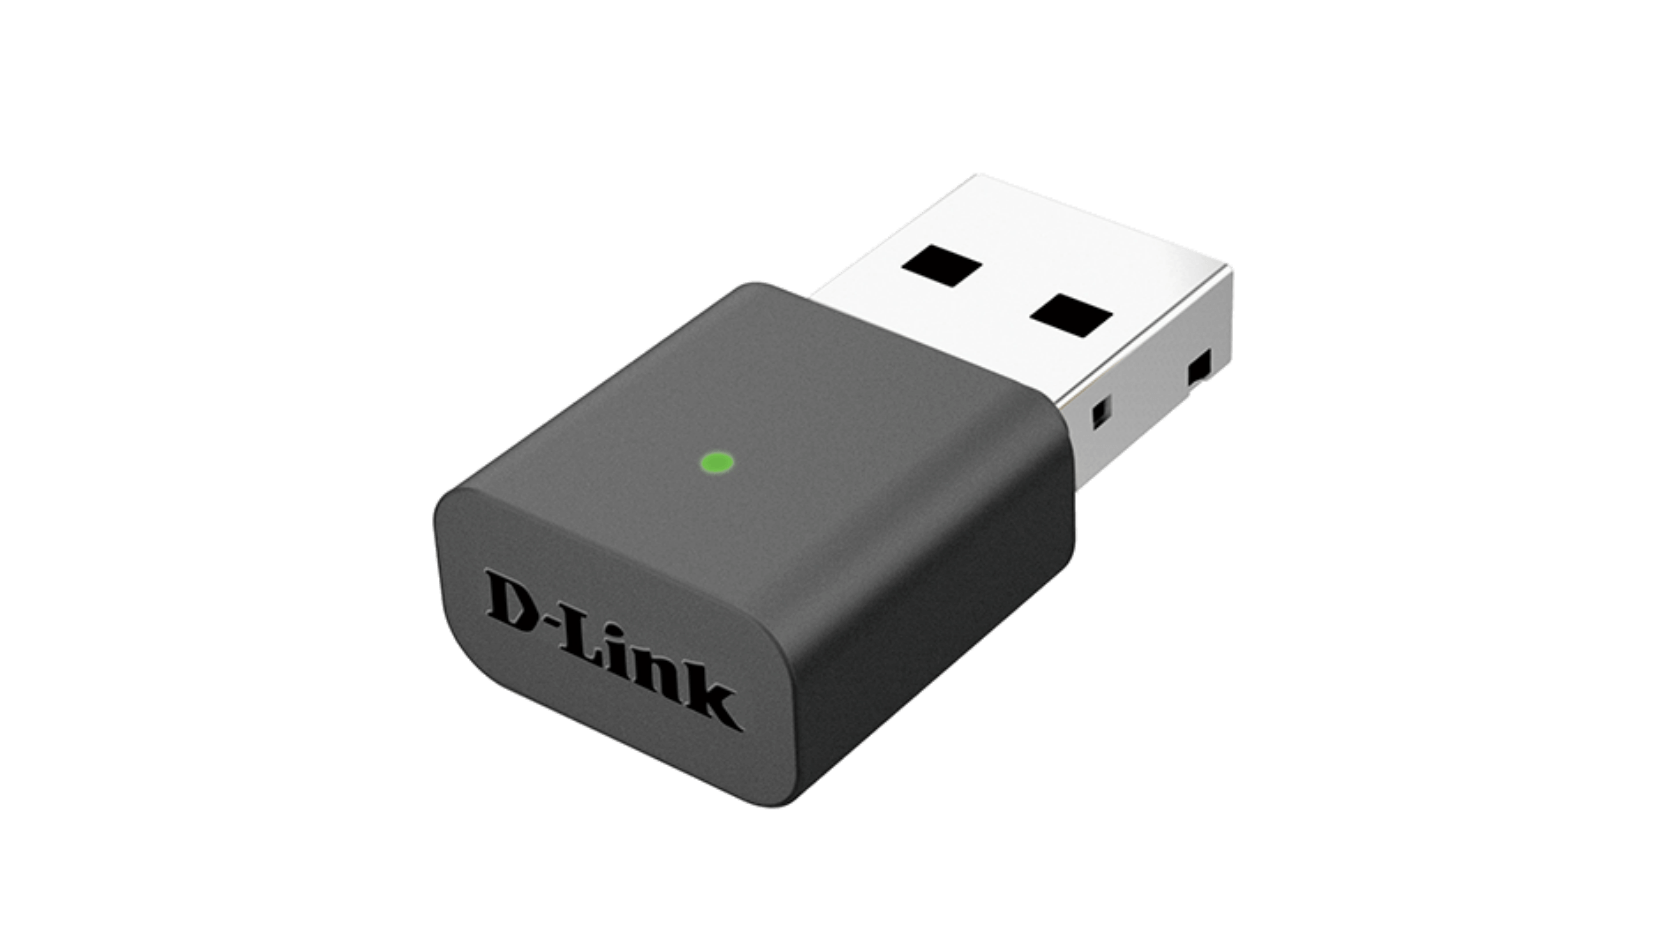 D-link dwa-131 driver download windows 7 64 bit cmdt 2022 pdf free download